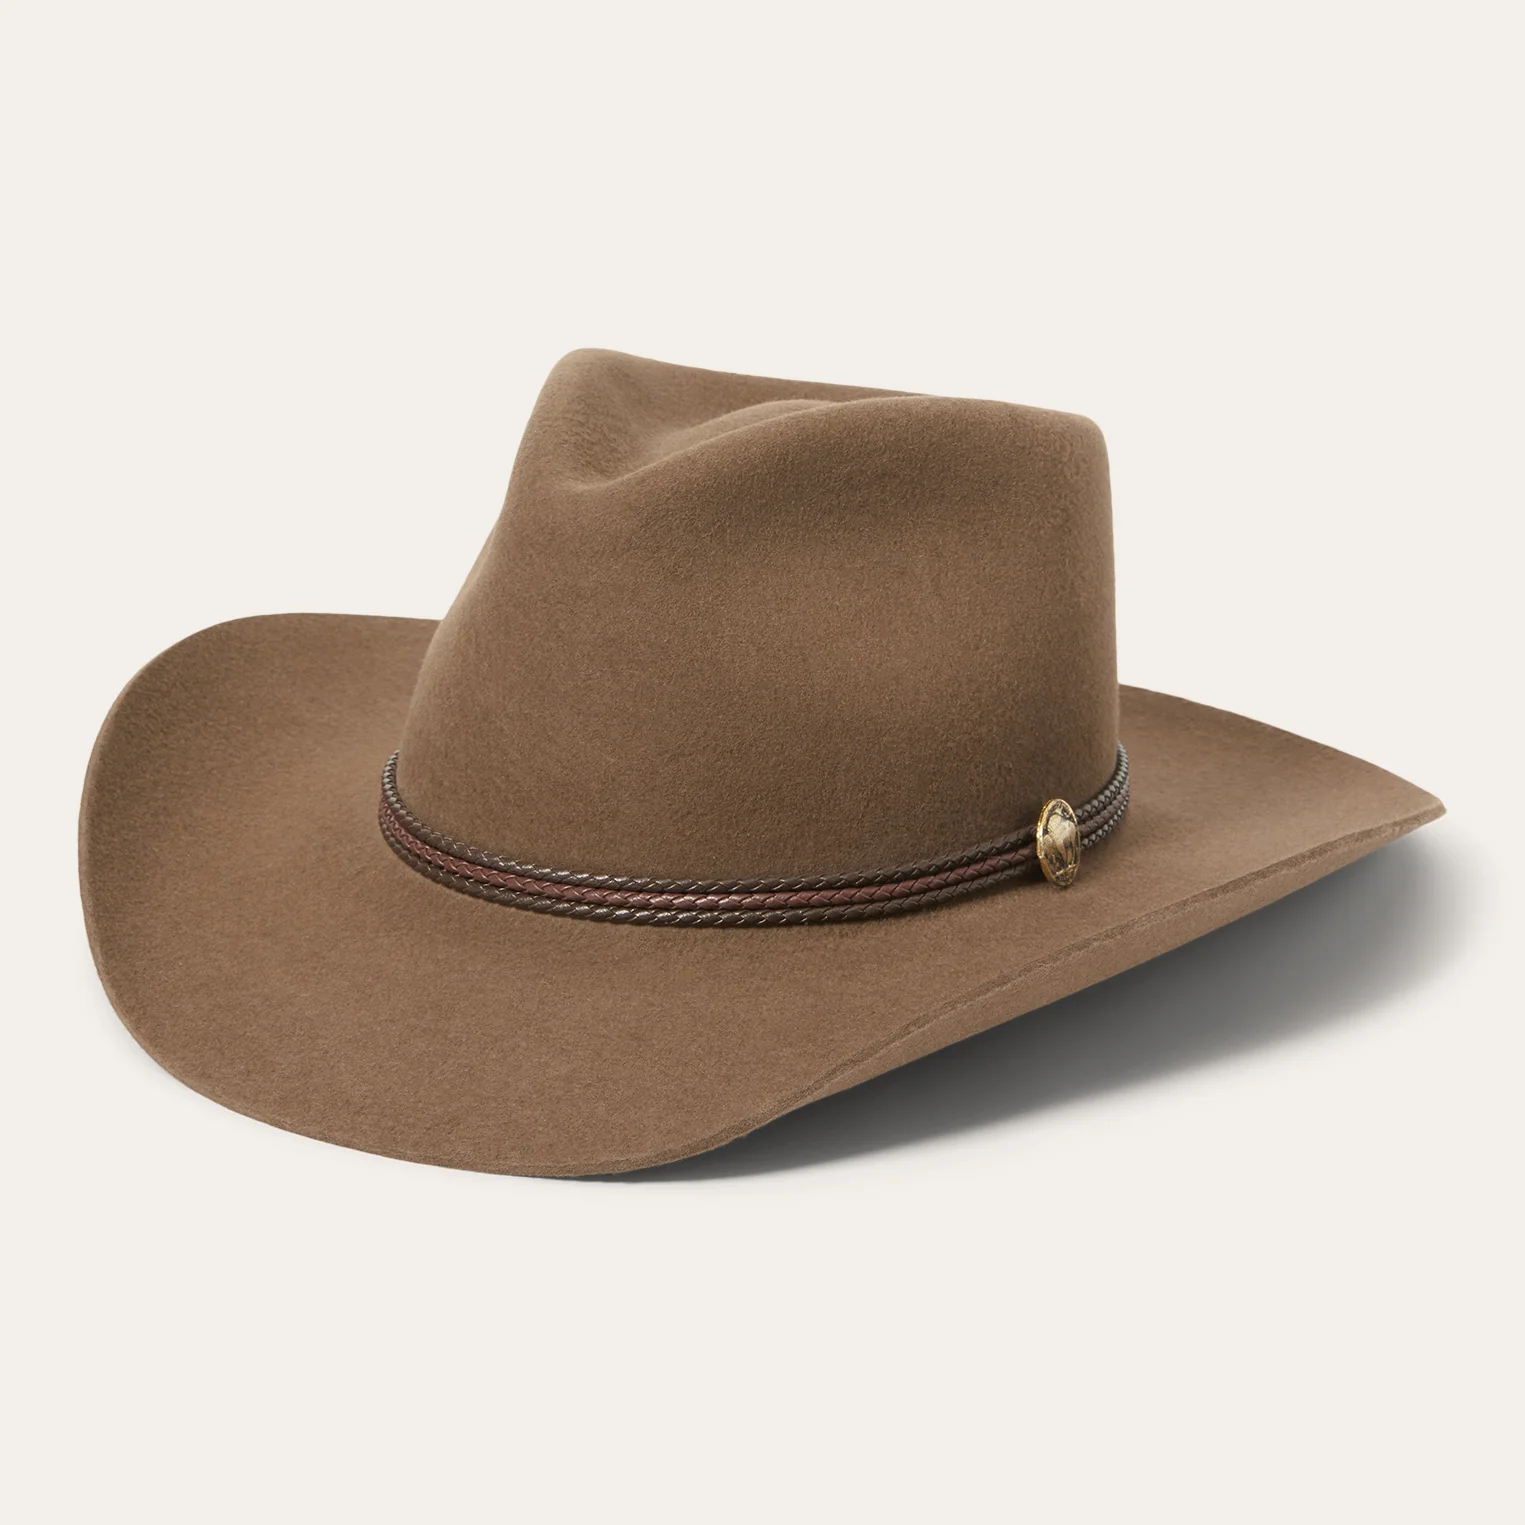 Beth Dutton's Exclusive Western Hat